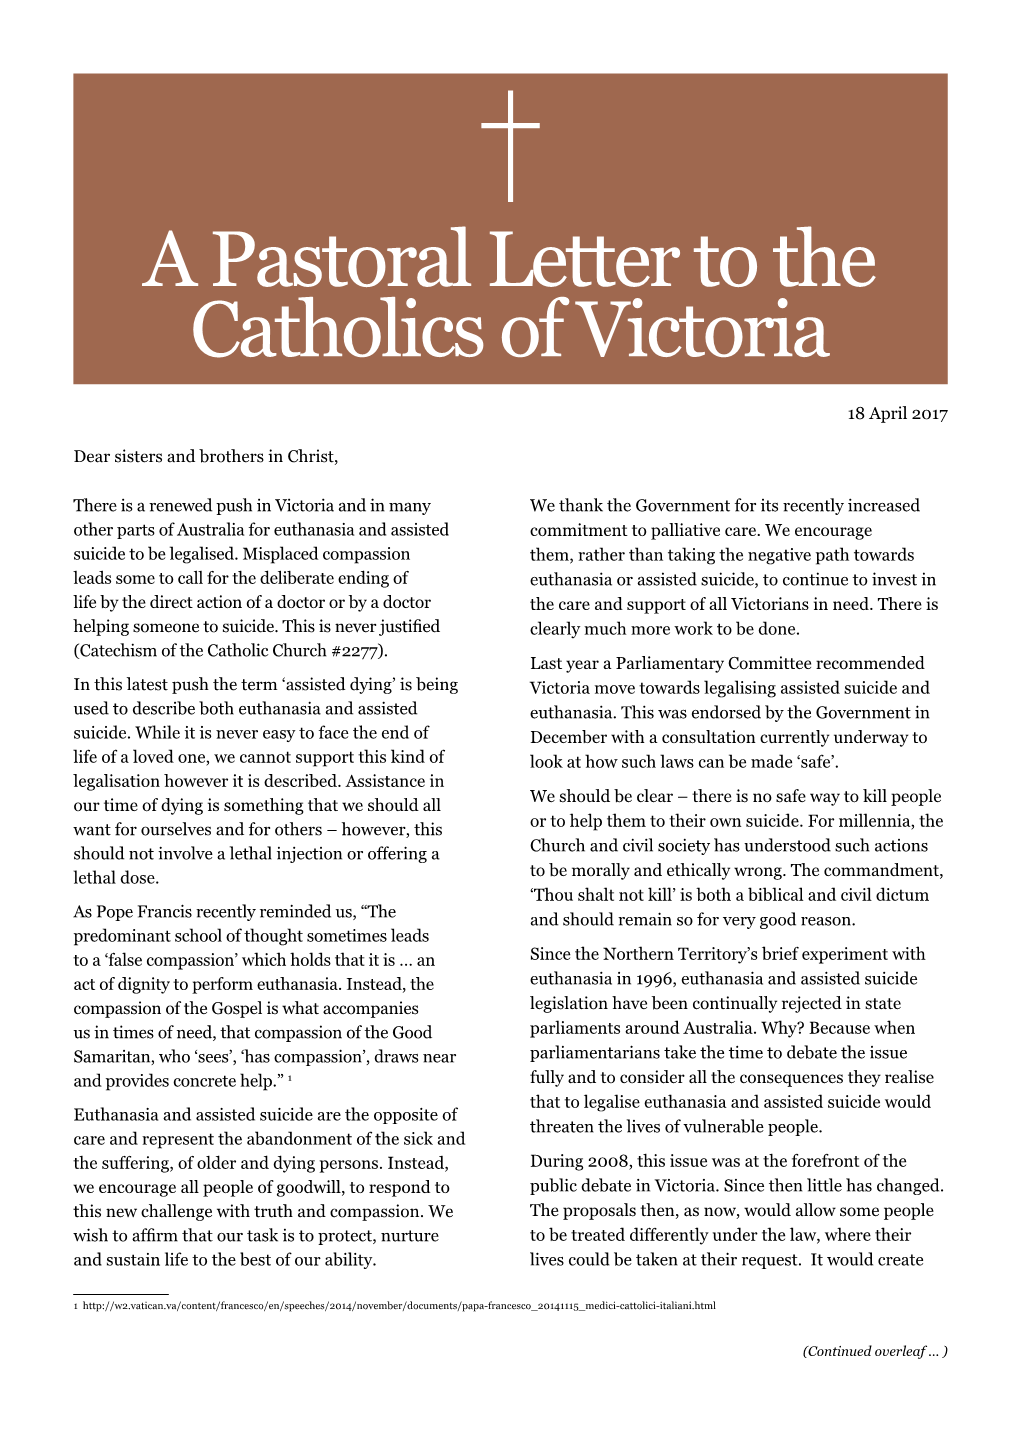 Pastoral Letter on Euthanasia